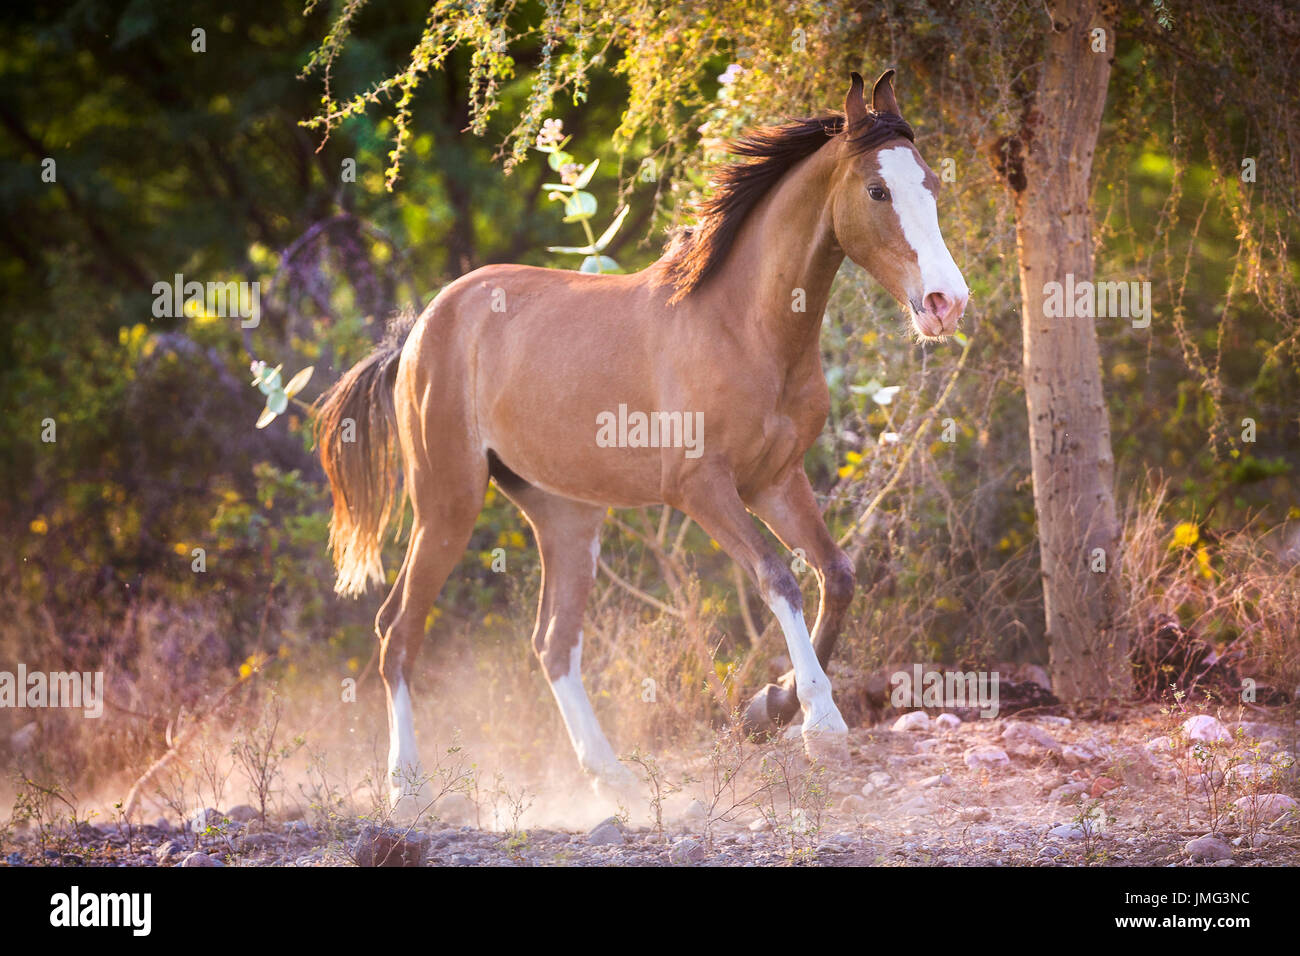 Marwari Horse. Chestnut mare galloping on stony ground. India Stock Photo